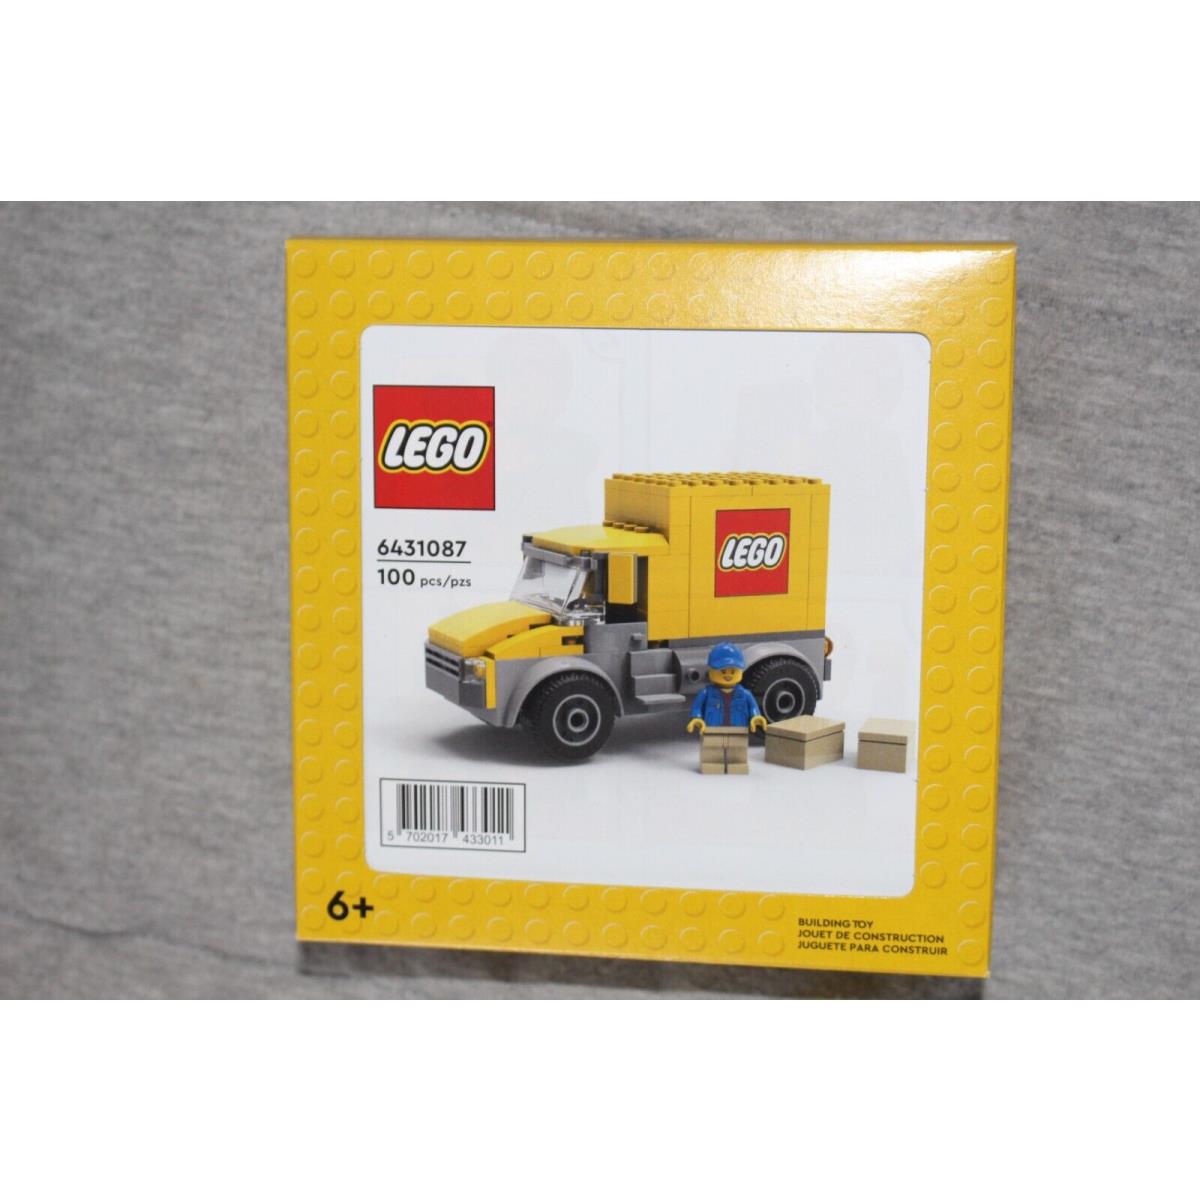 Lego 6431087 Truck Promotional